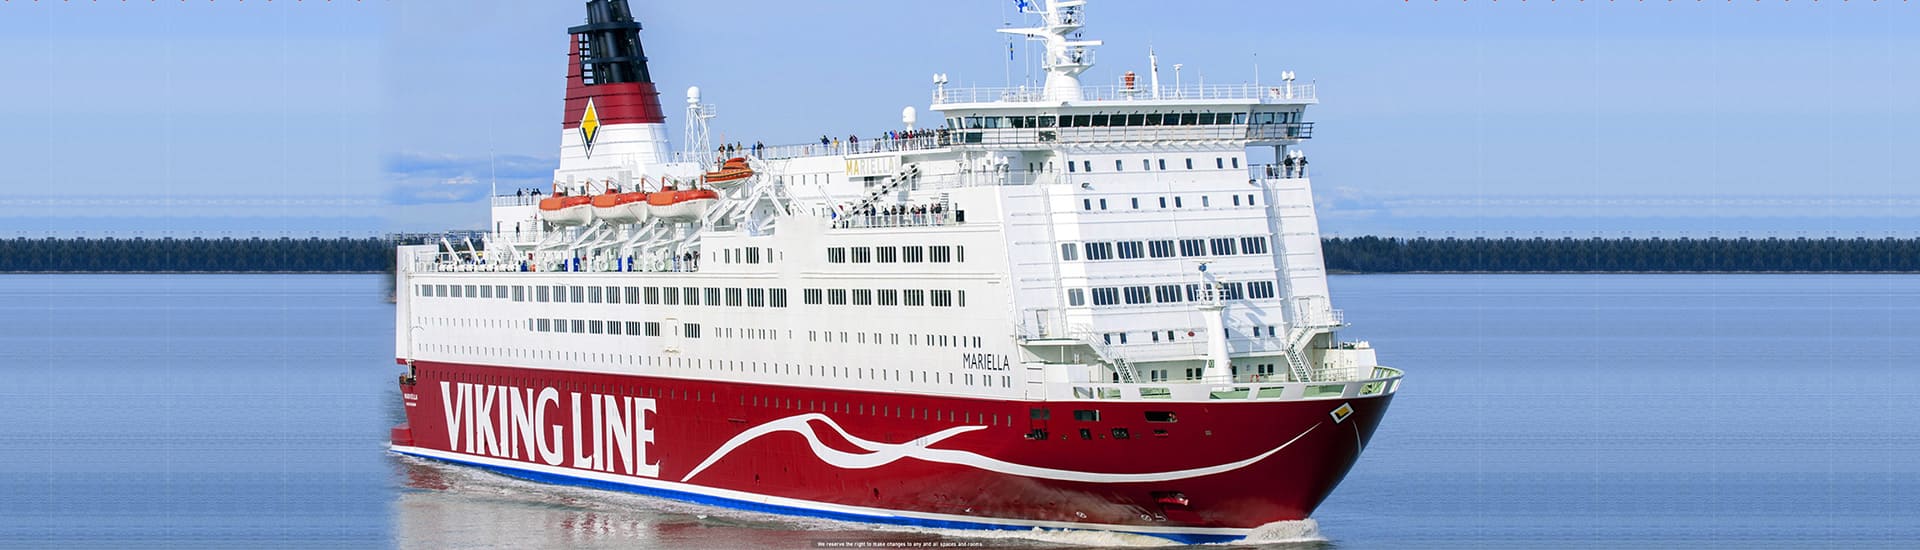 Mariella Cruise serves the Stockholm – Helsinki route